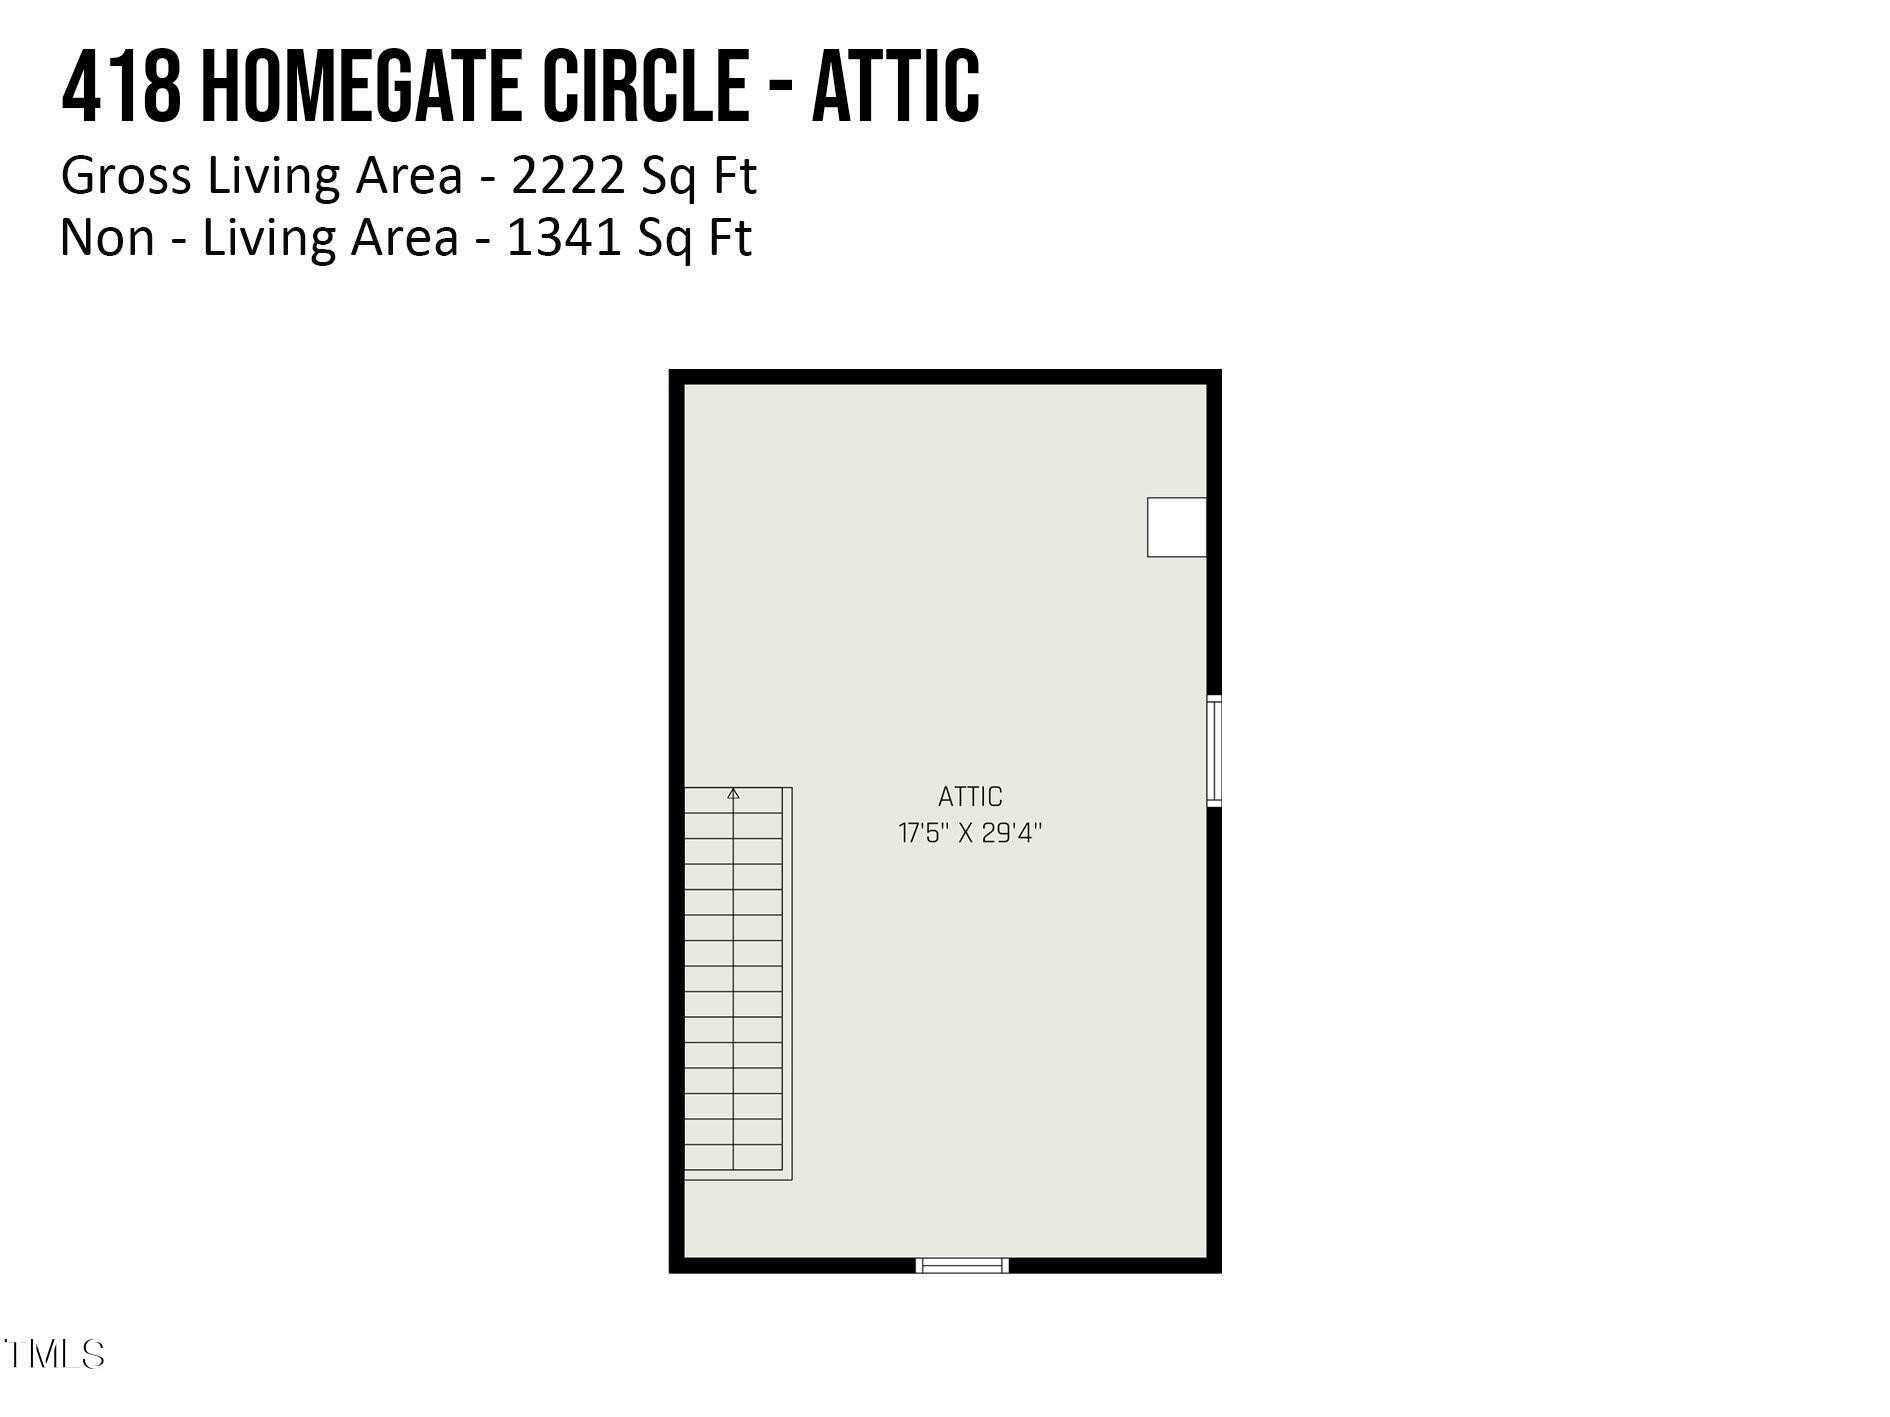 20. 418 Homegate Circle